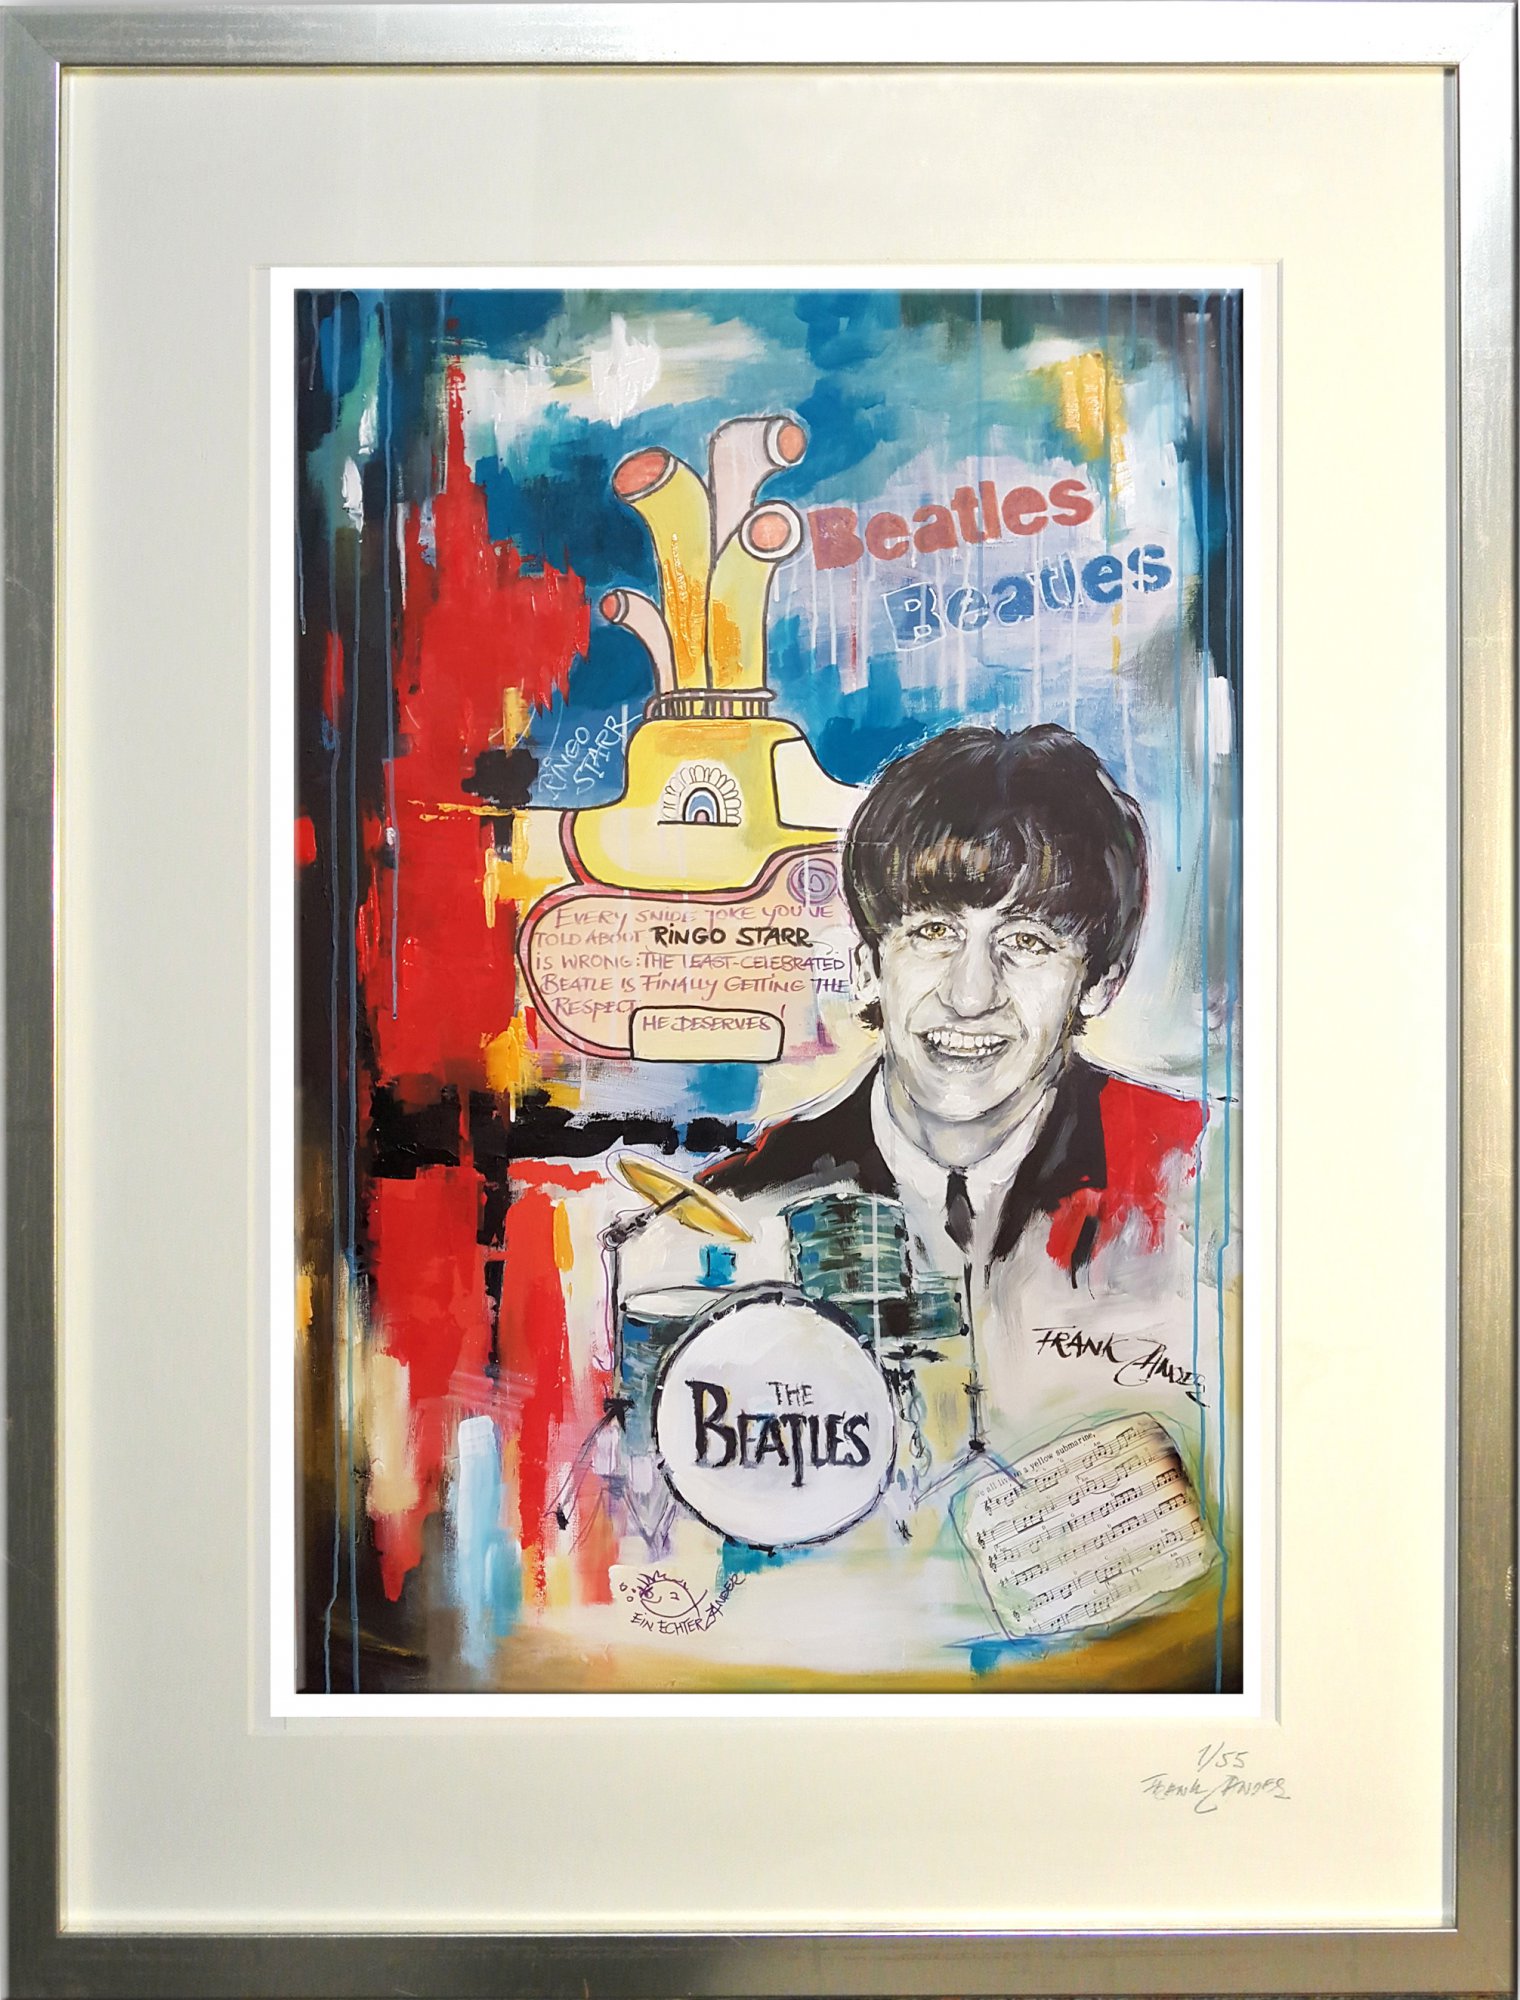 Kunstdruck mit Rahmen "Ringo Starr"